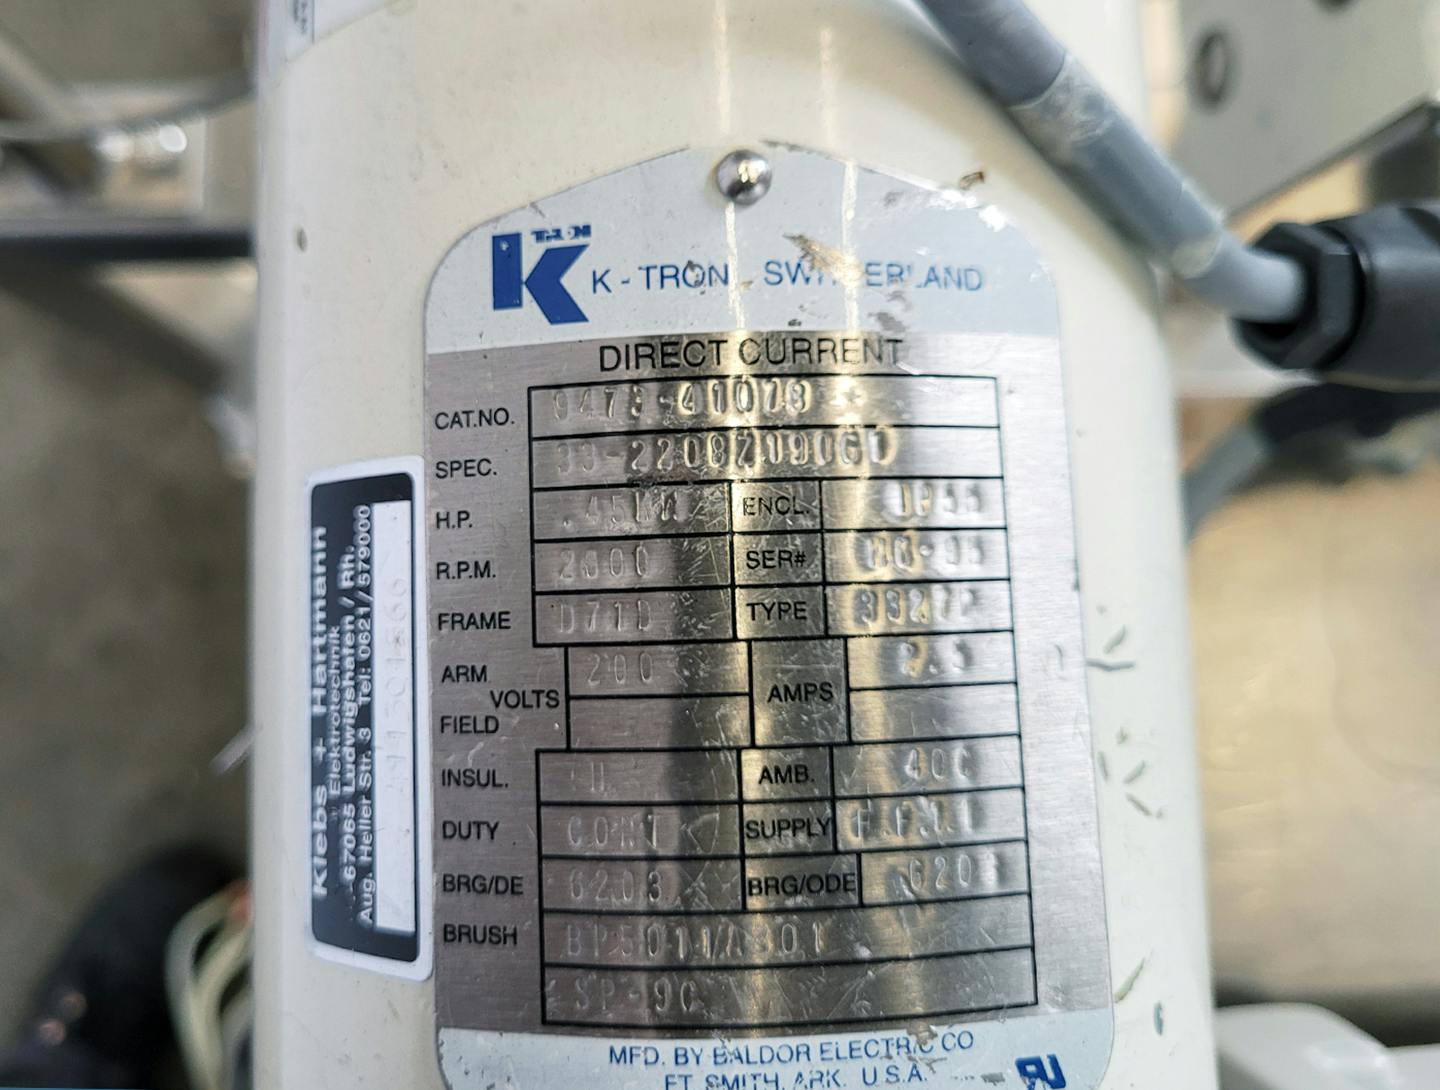 K-tron K2-ML-T35 loss-in-weight feeder - Tornillo dosificador - image 12